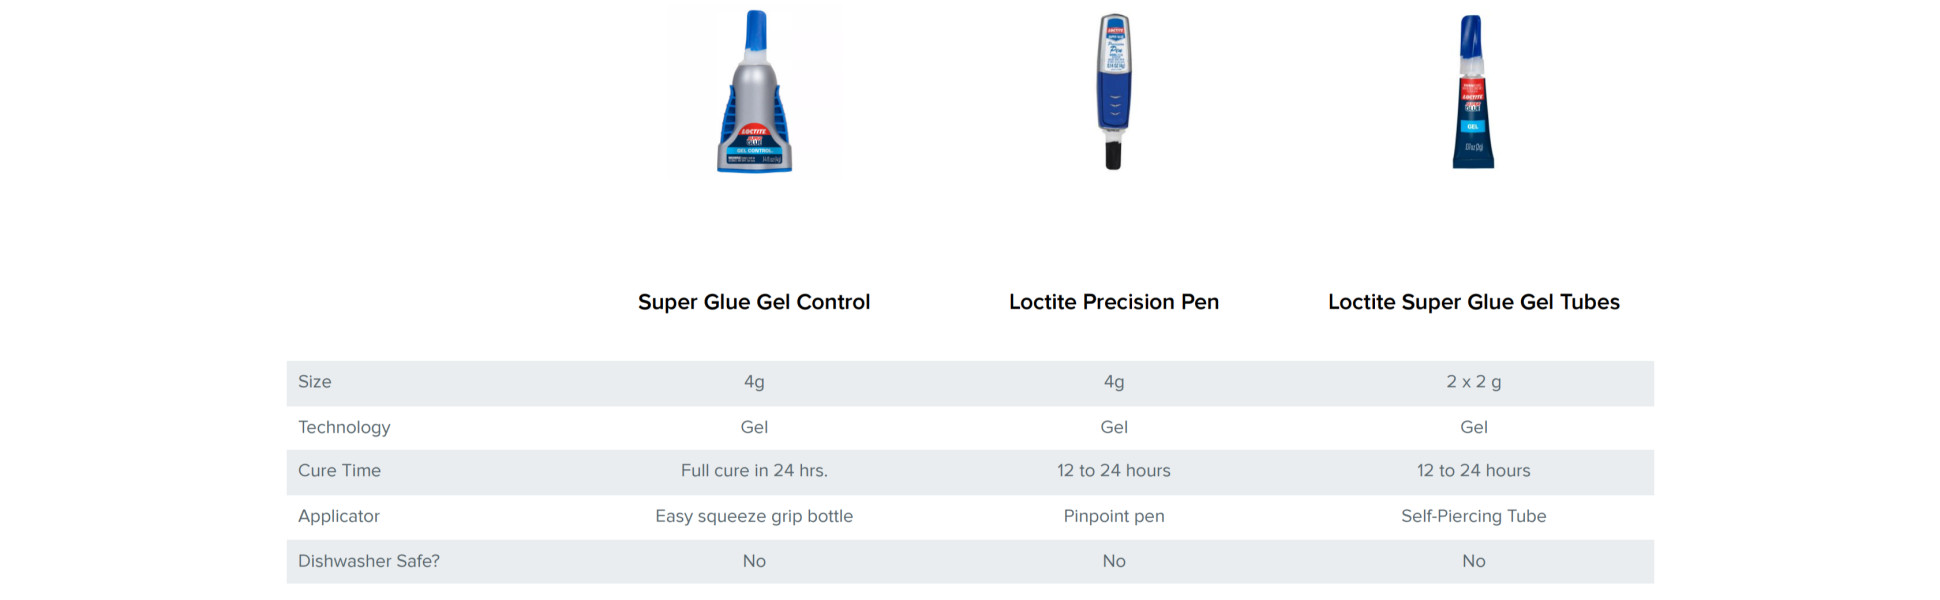 Shoe Glue 0.6 oz. Flexible Adhesive Clear Tube (each)